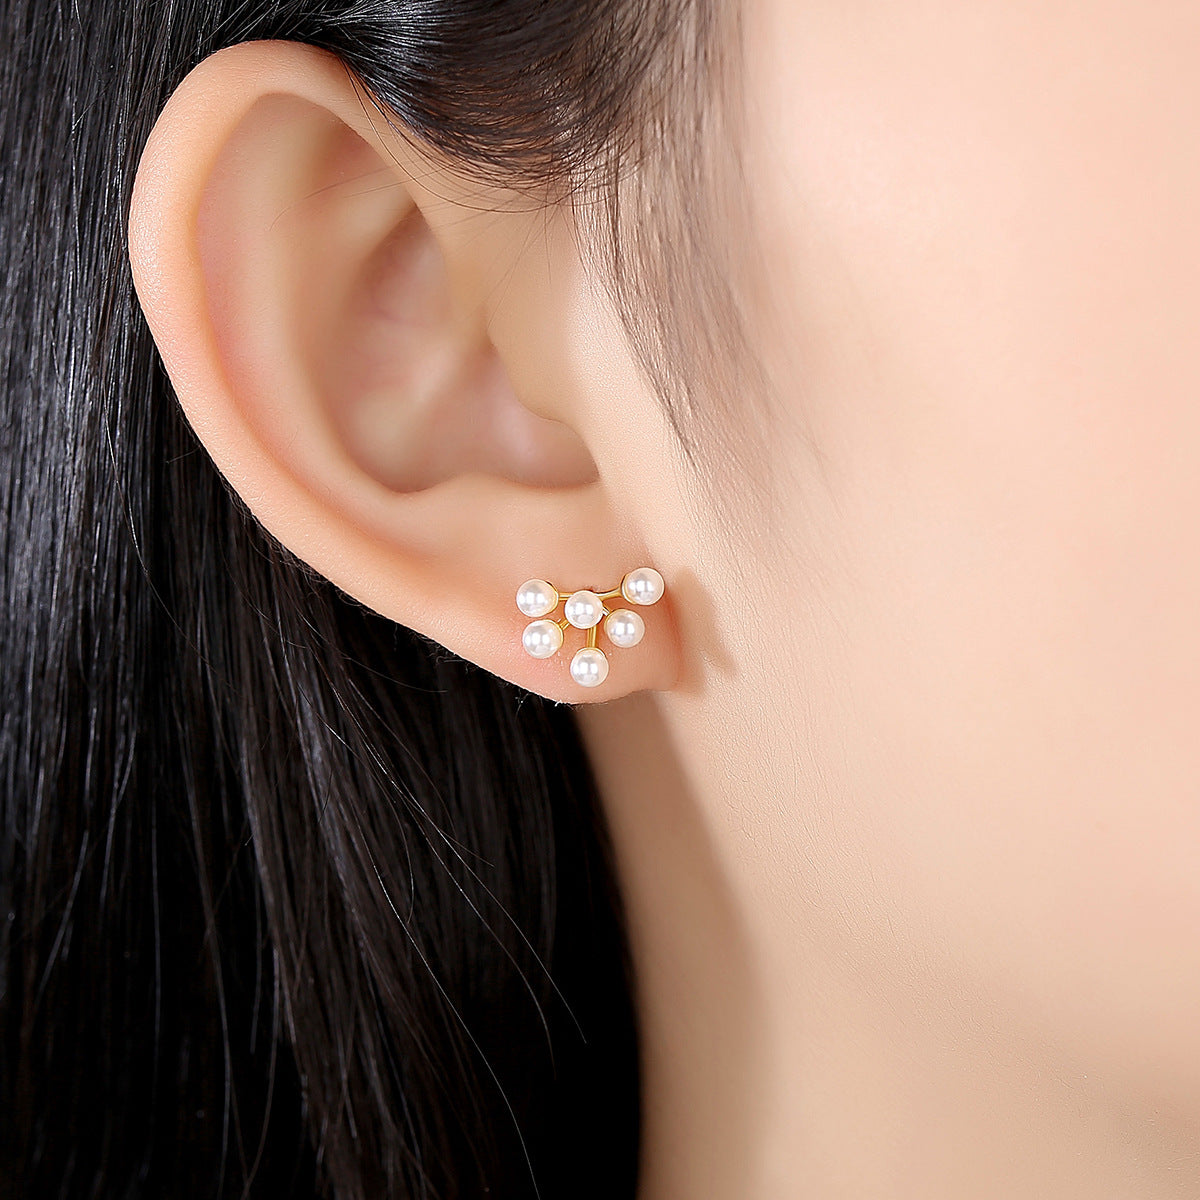 Small Pearl Earrings Studs